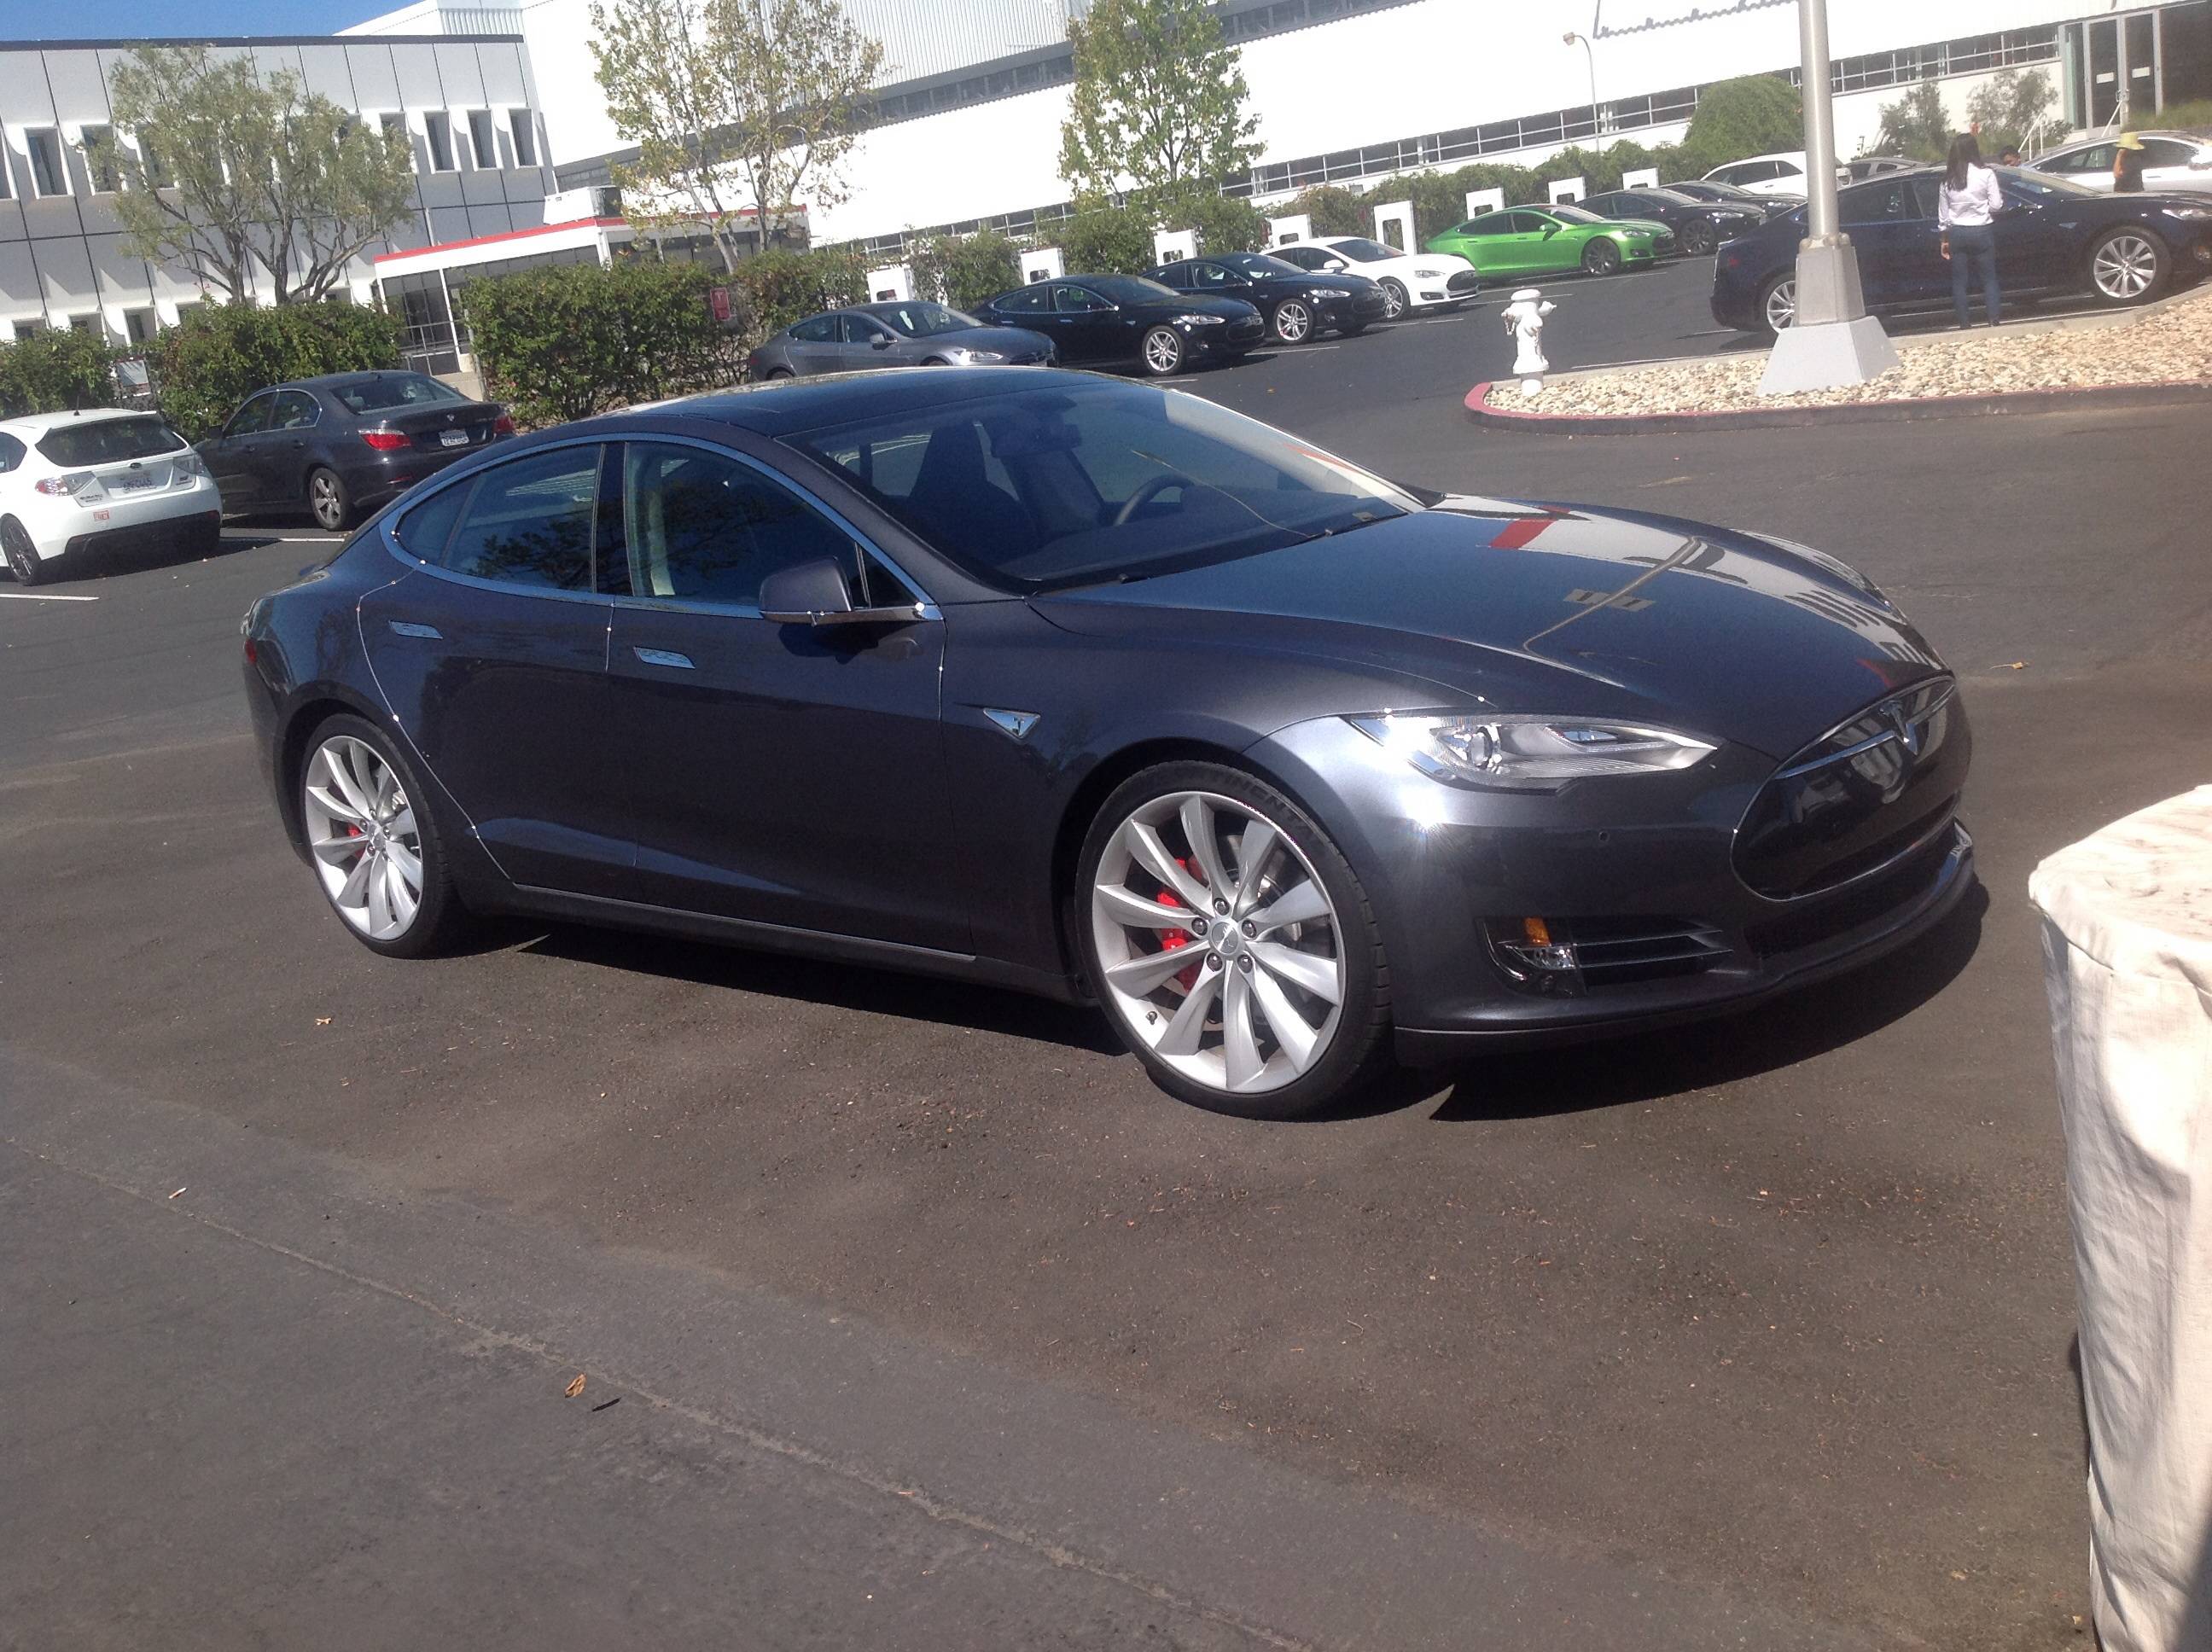 New Tesla Model S Metallic Grey Debuts −